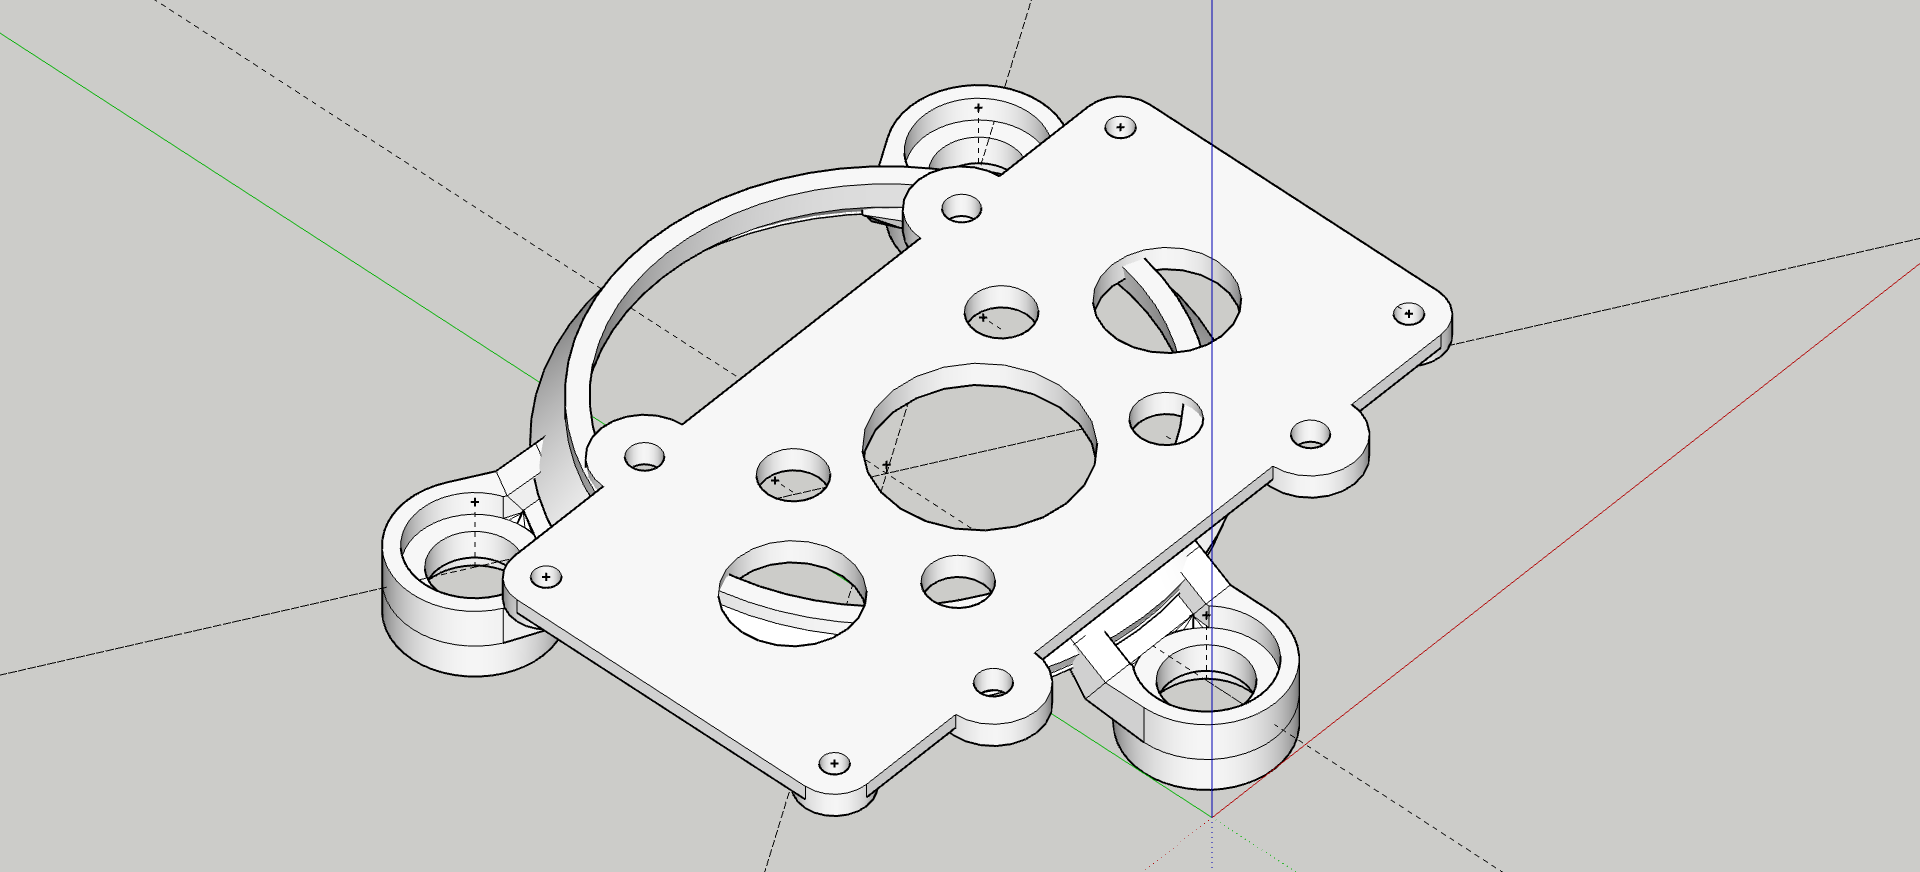 3D Design for a sPOD SourceLT and Universal Mount